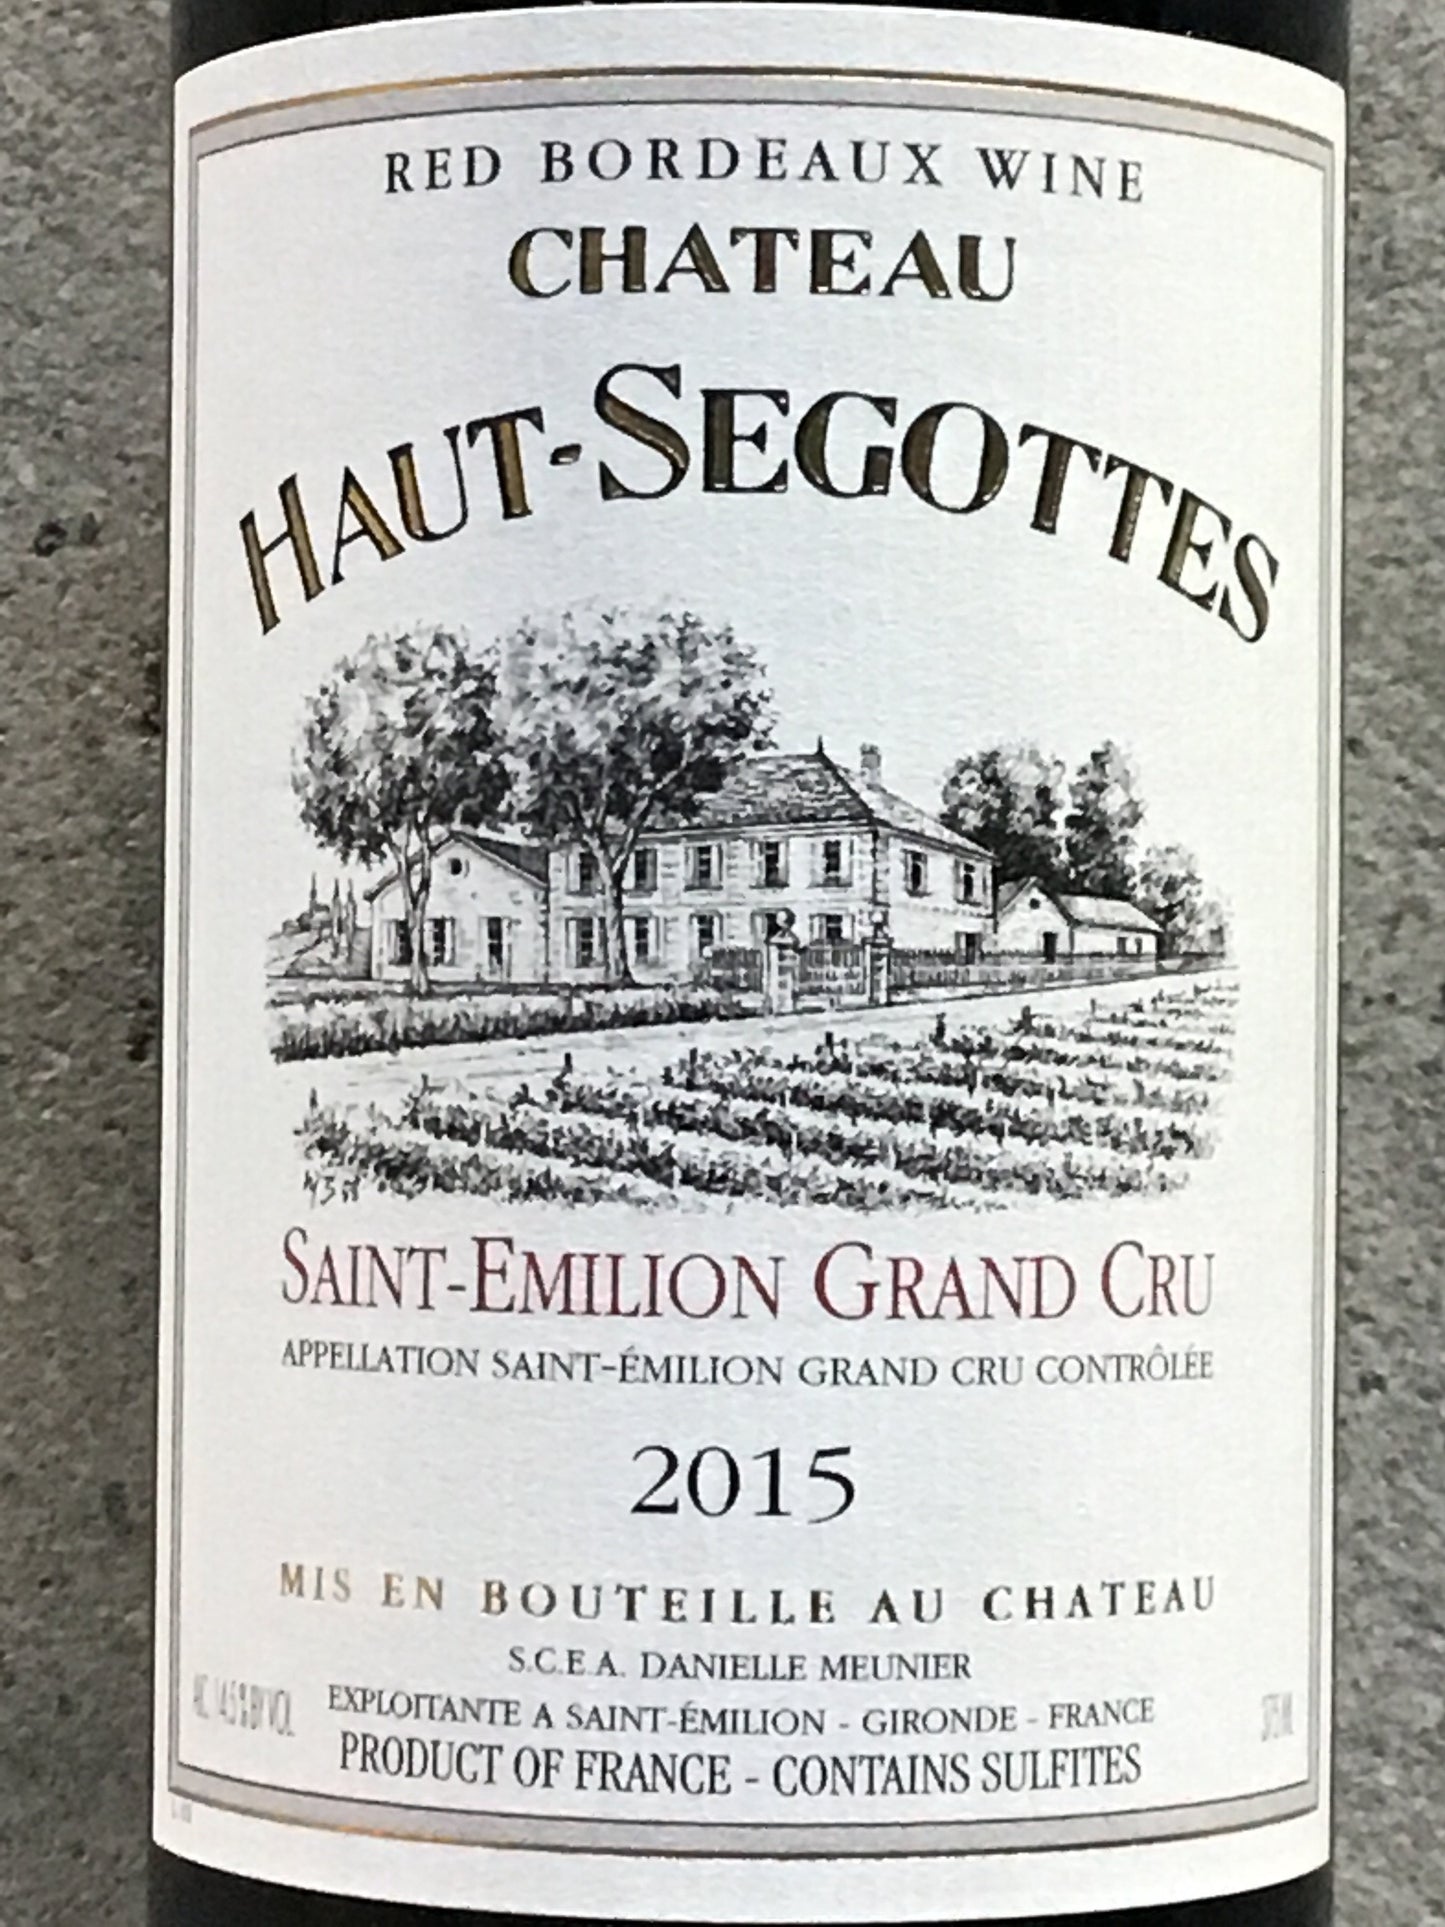 Chateau Haut-Segottes - Saint-Emilion Grand Cru - 375ml